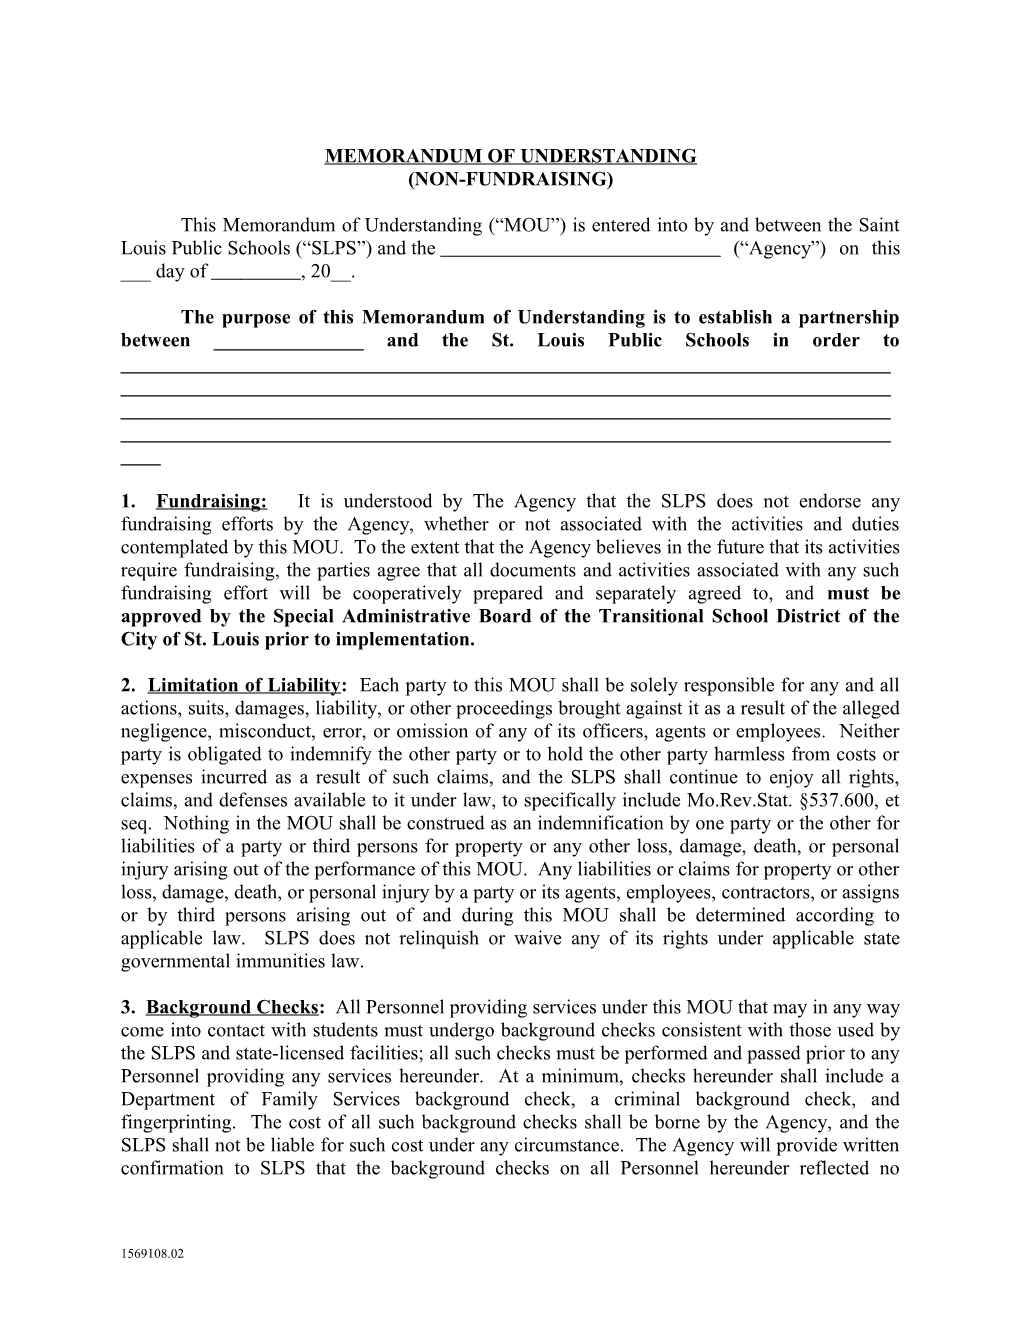 Memorandum of Understanding (MOU) Approval Process